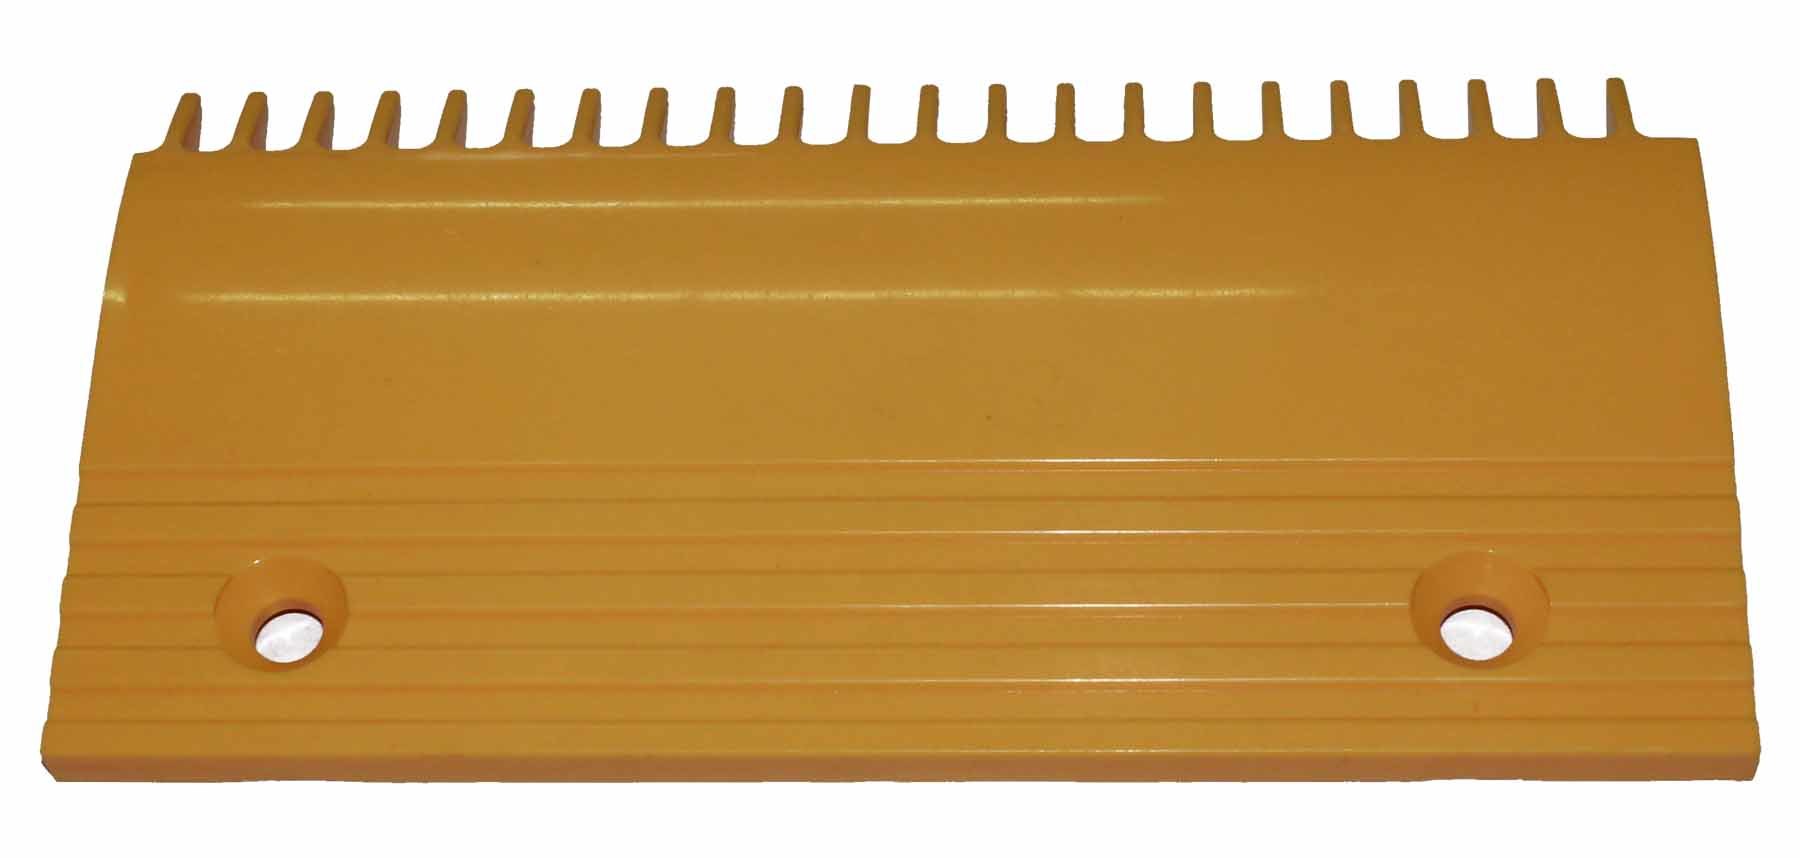 Plastic Comb Plate